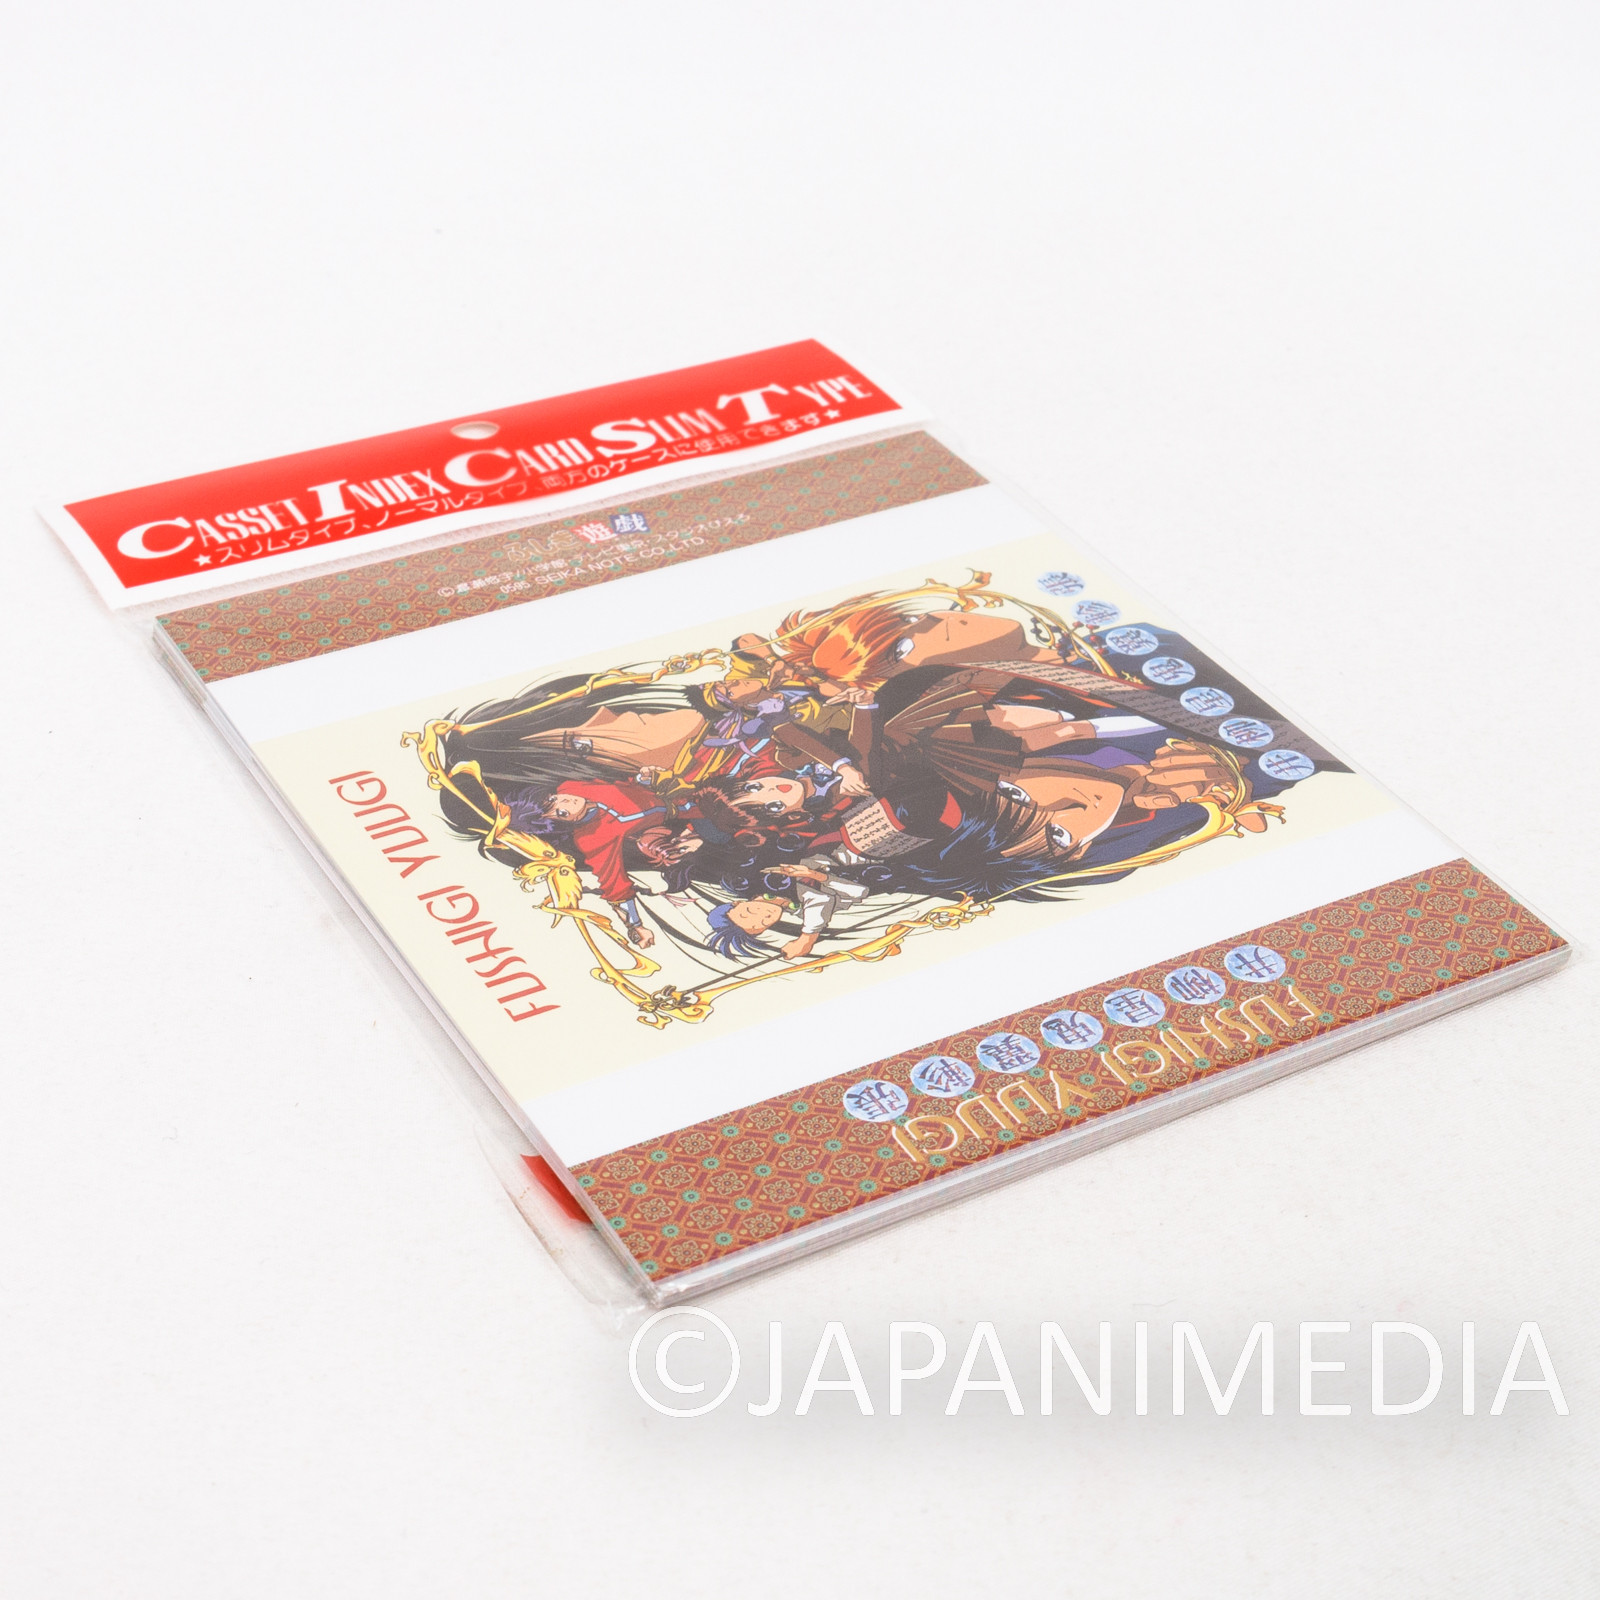 Fushigi Yugi Cassette Index Card 12 Sheet Set